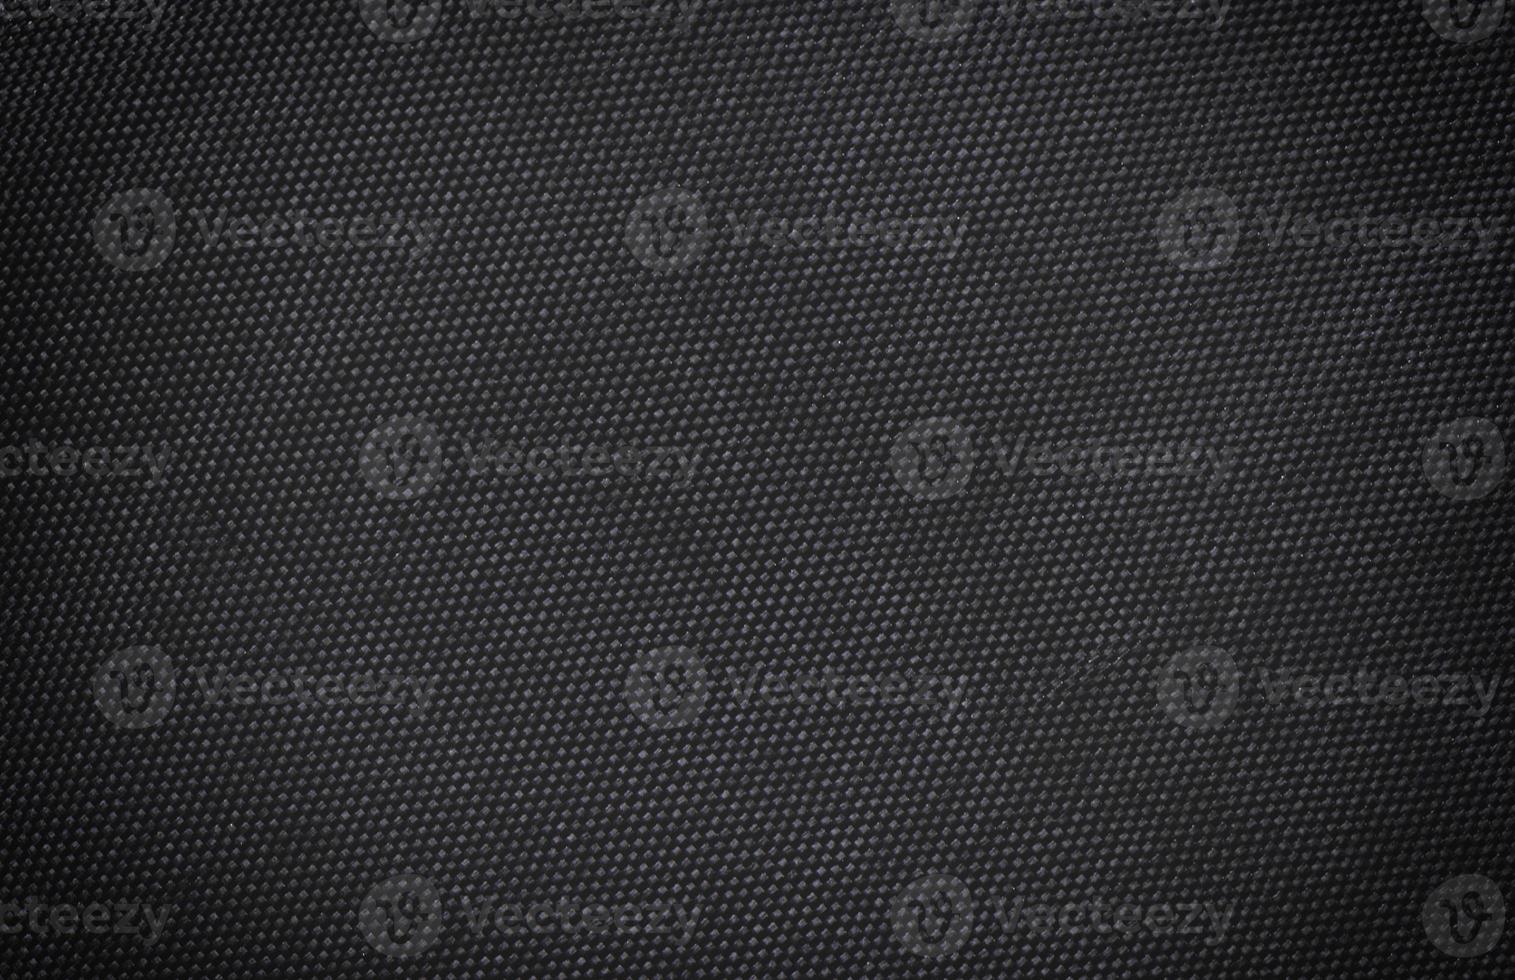 svart tyg duk silke textur bakgrund. abstrakt närbild detalj av textilmaterial tapeter foto